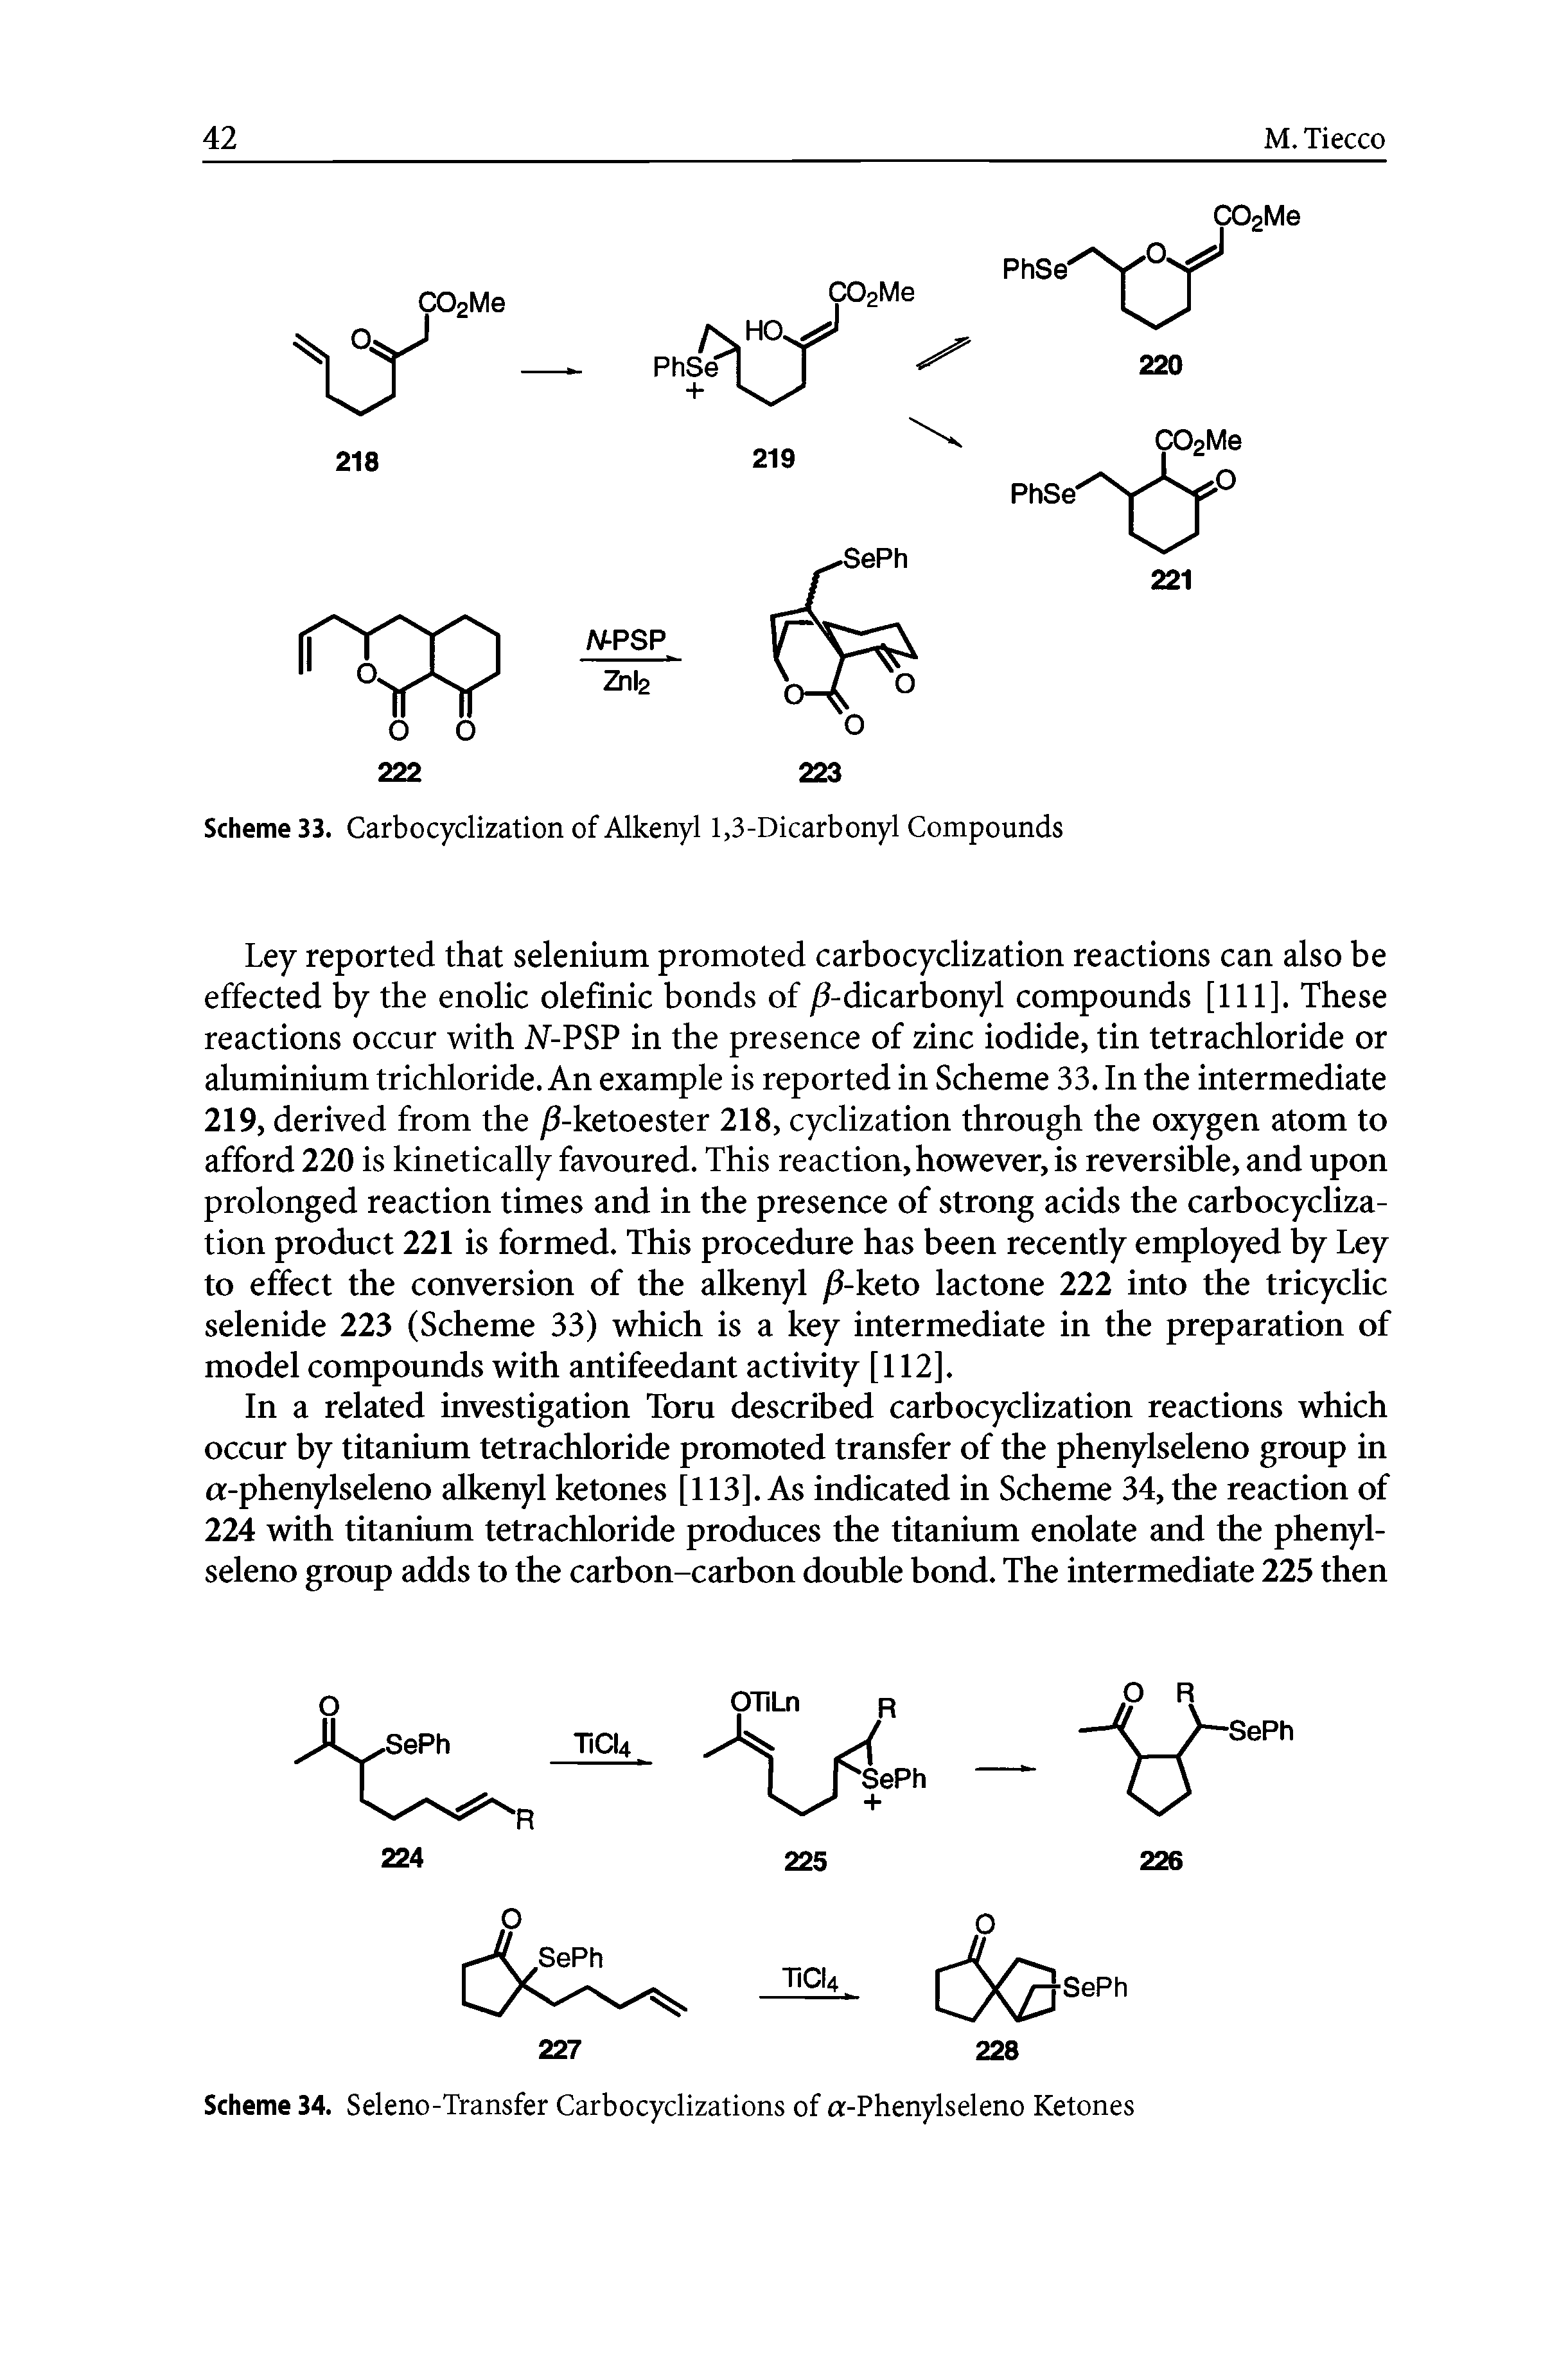 Scheme 34. Seleno-Transfer Carbocyclizations of a-Phenylseleno Ketones...